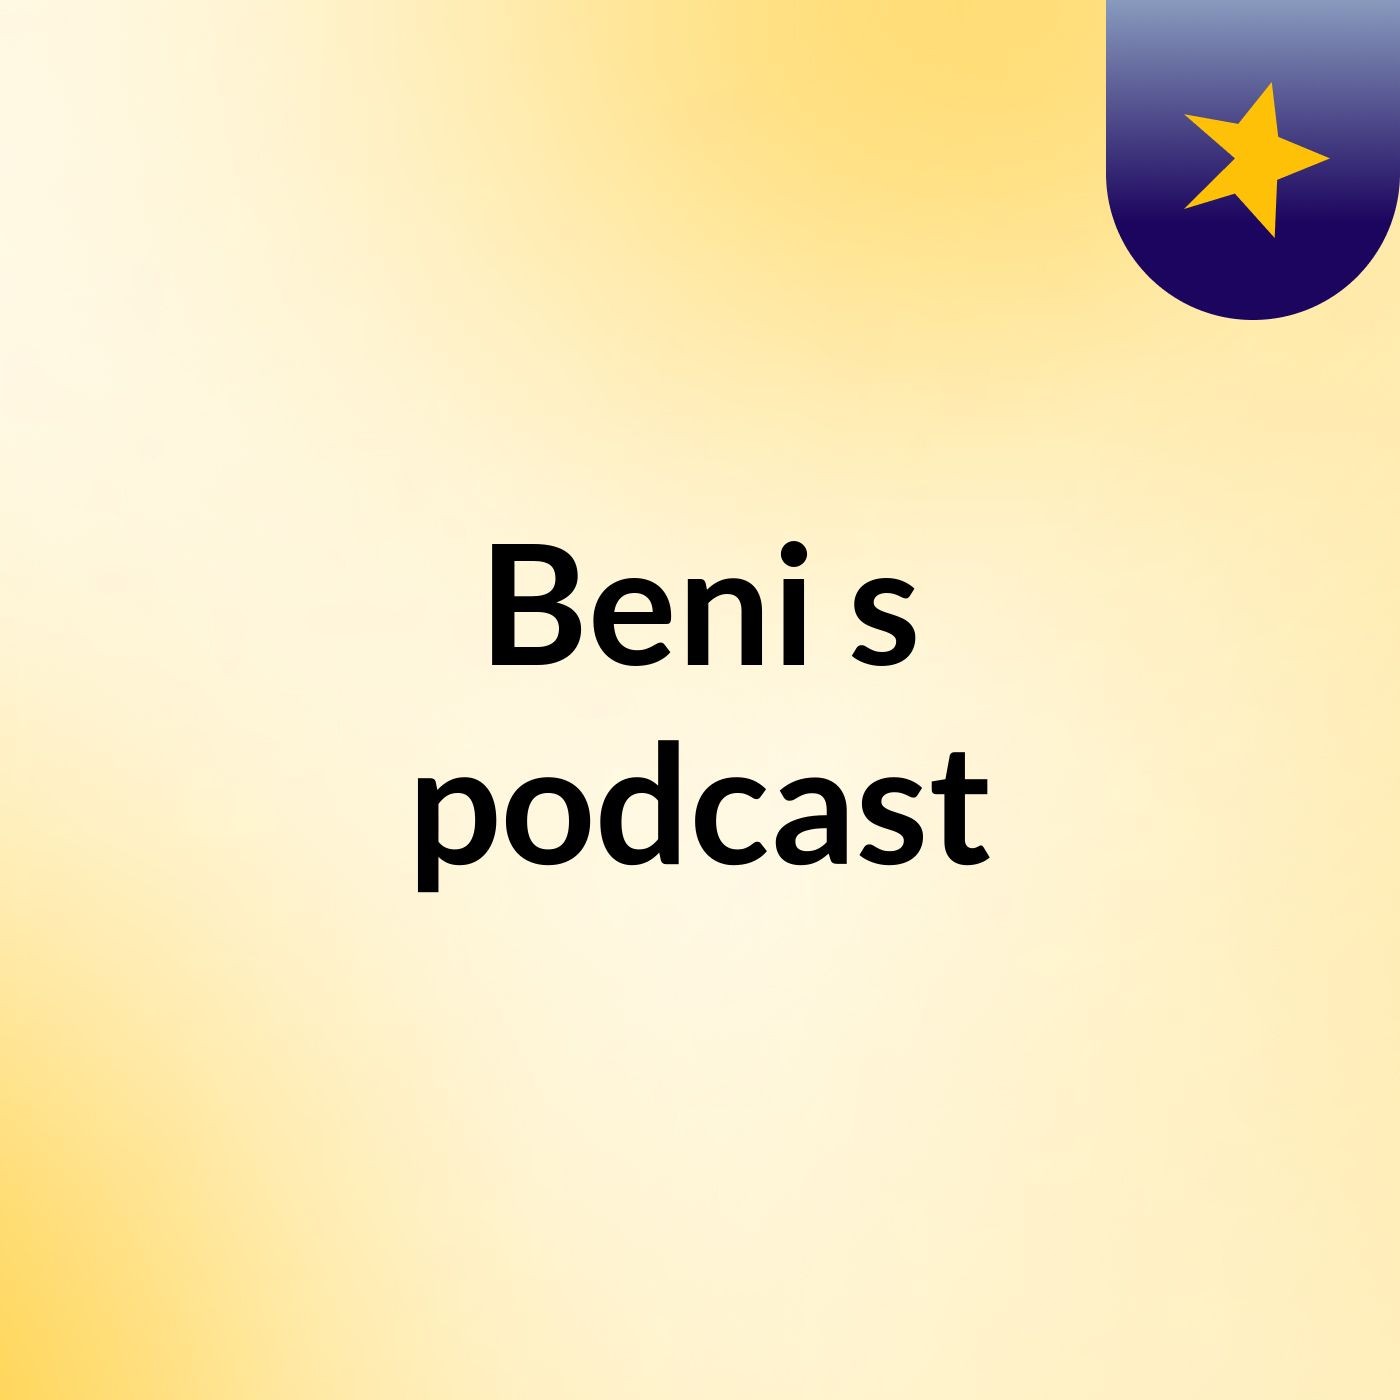 Beni's podcast